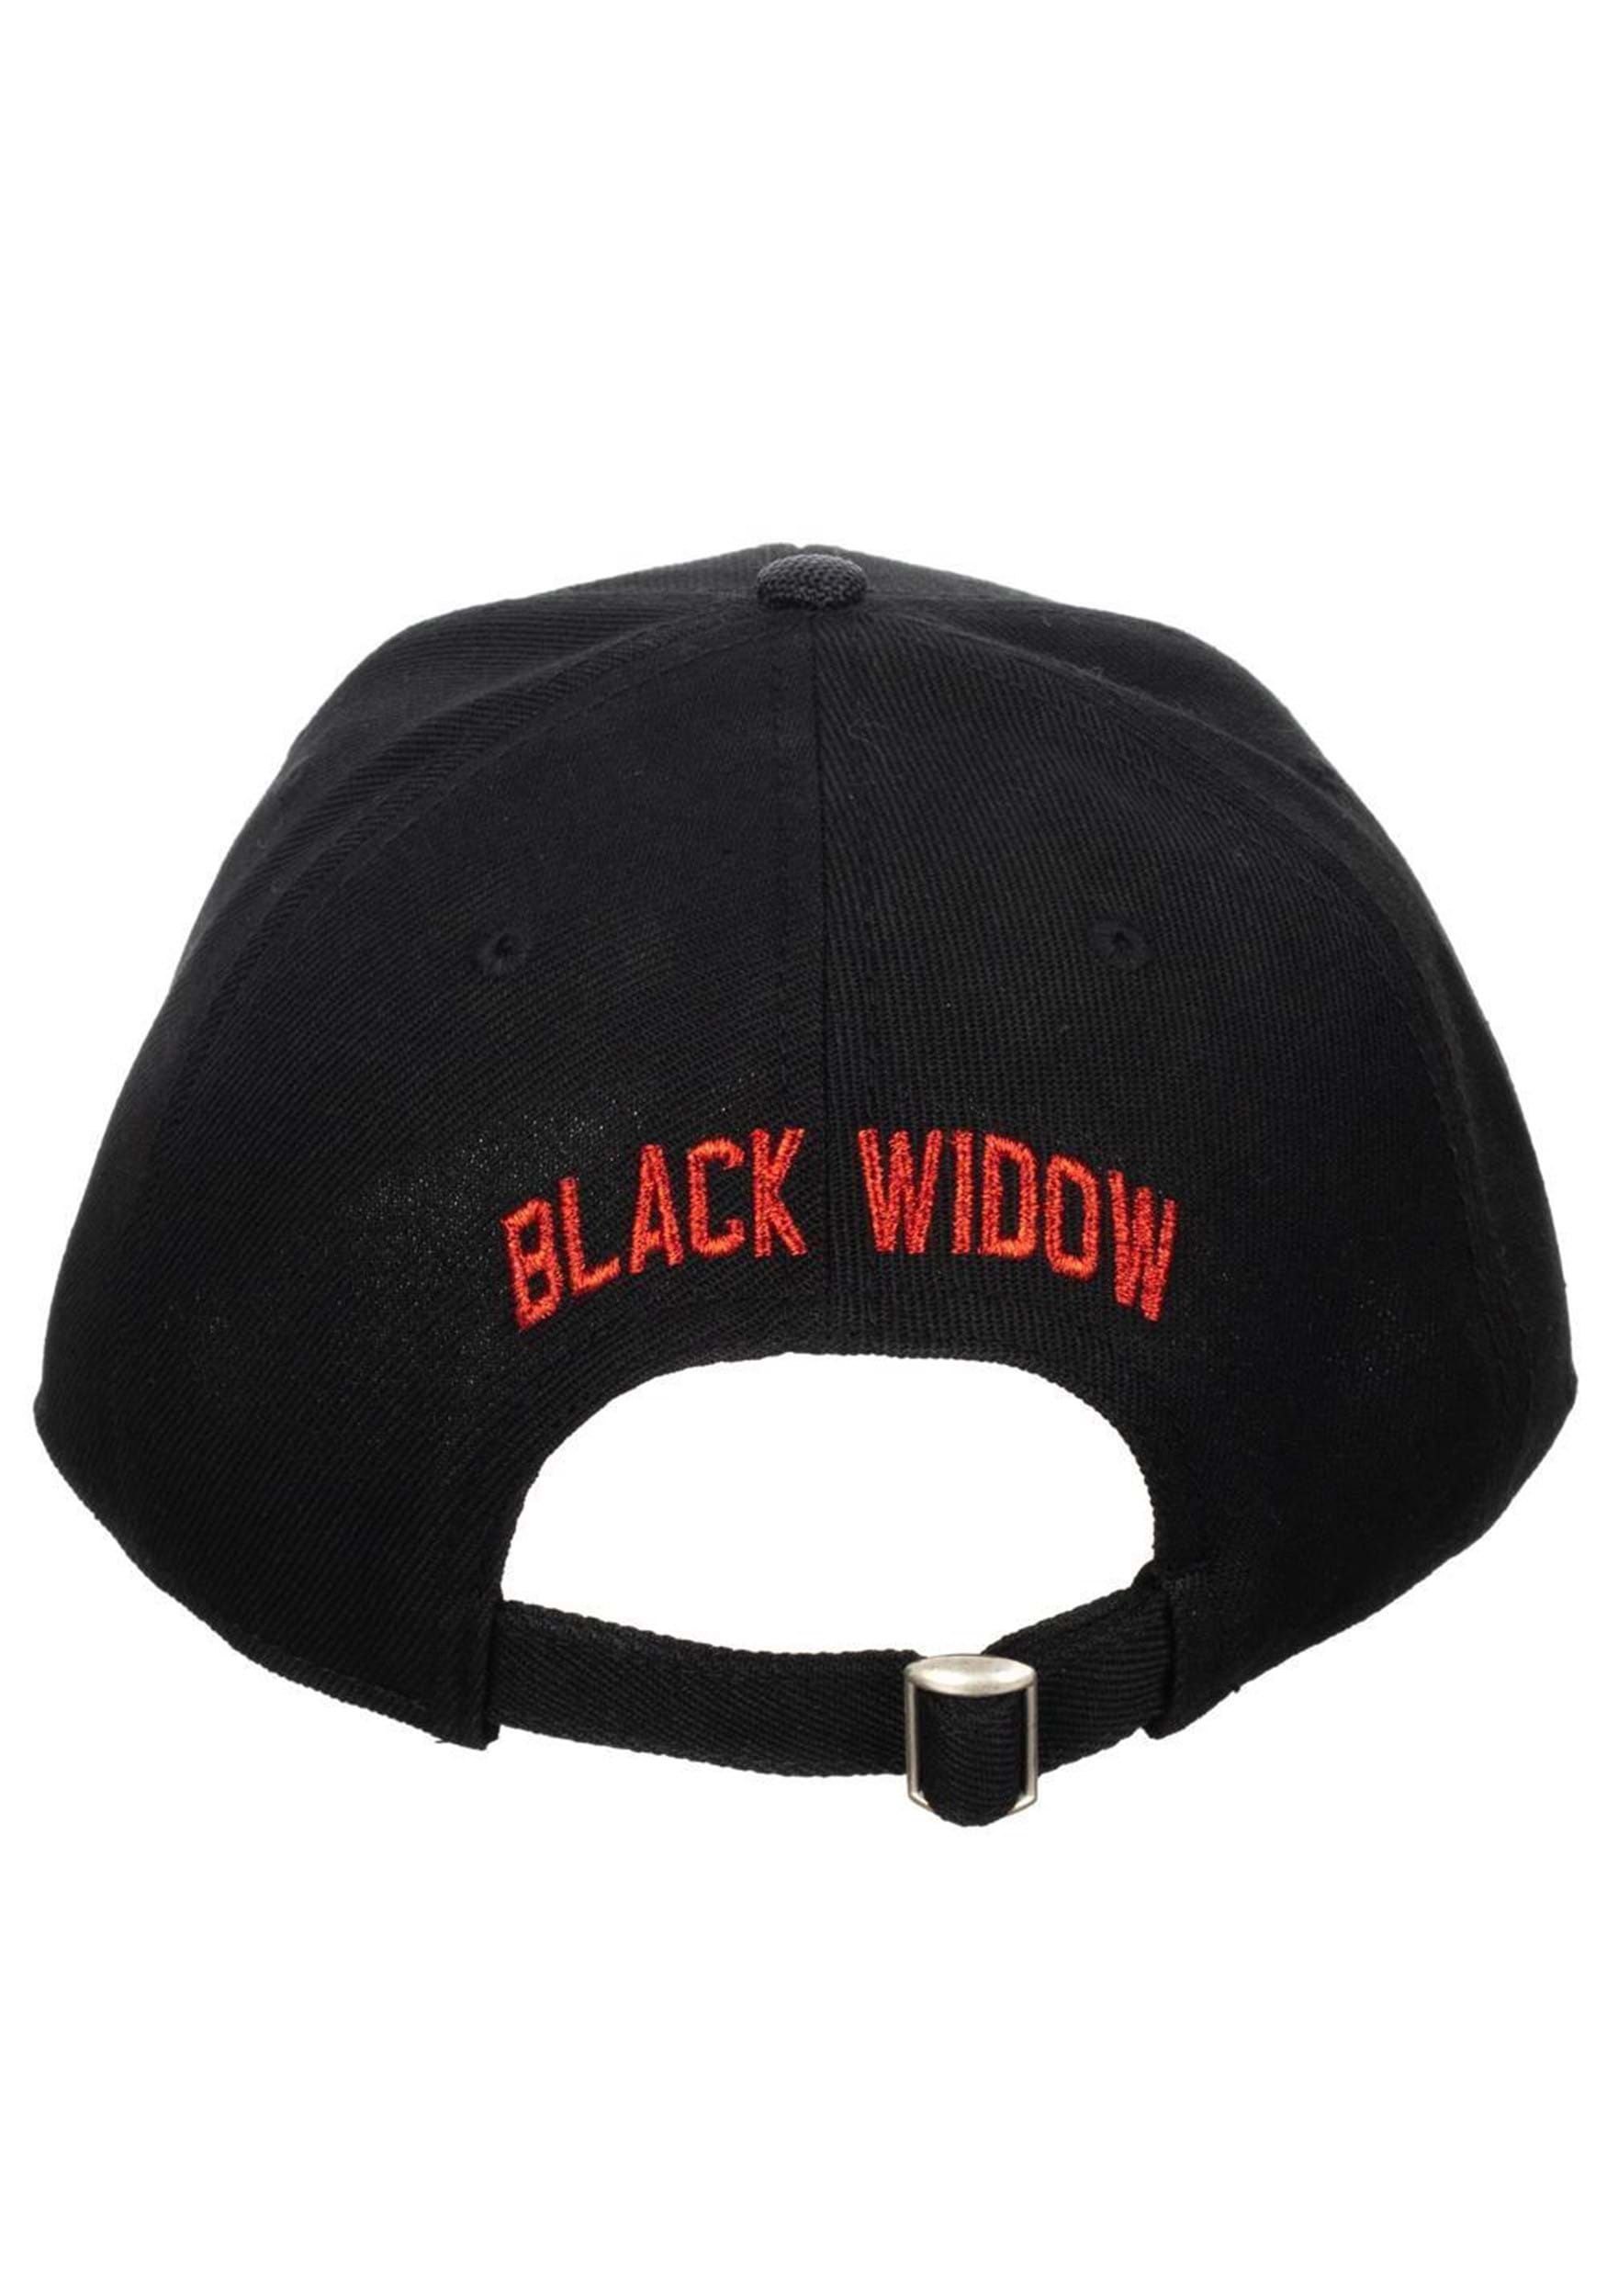 Marvel Black Widow Chrome Weld Ballistic Bill Hat